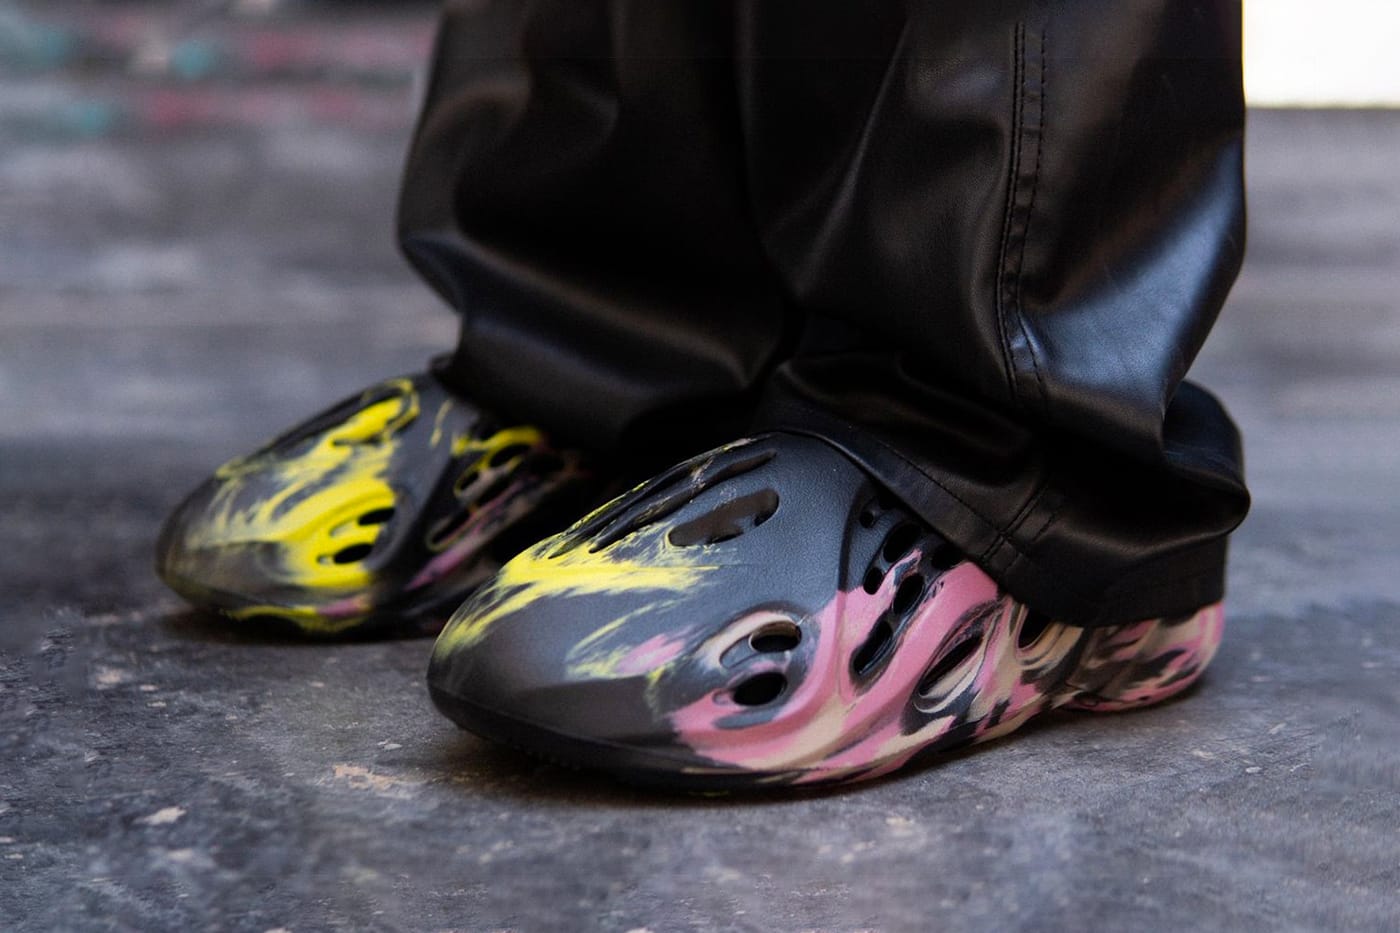 adidas YEEZY Foam Runner "MX Carbon" On-Foot Look | HYPEBEAST